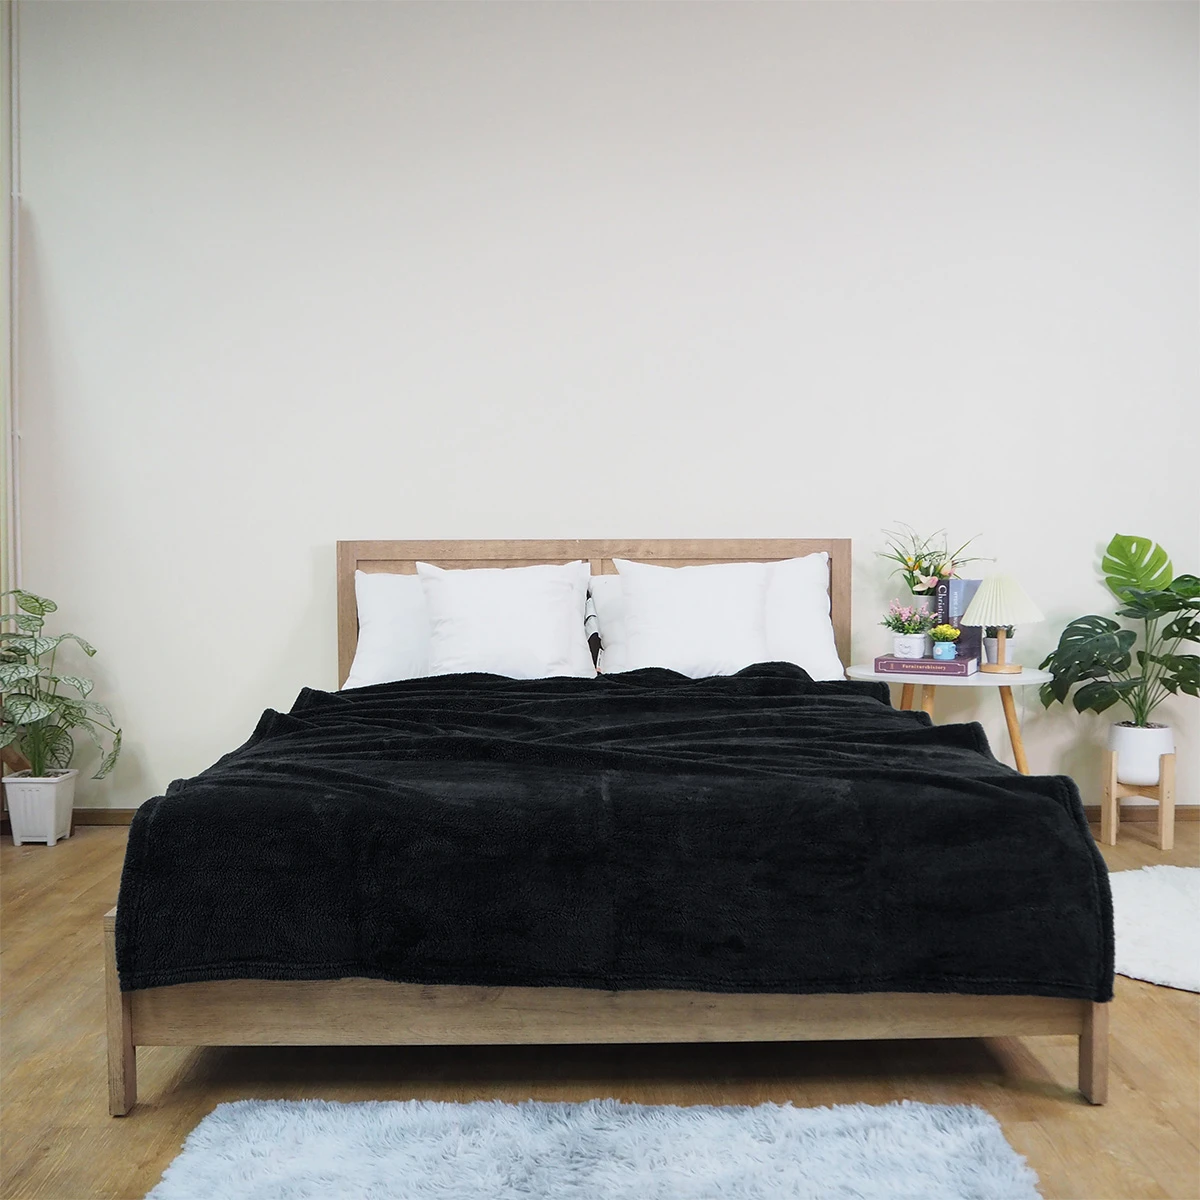 Fashion Hometex: Blanket Supplier |  Ready-to-ship Sable Plush Blanket (Black)